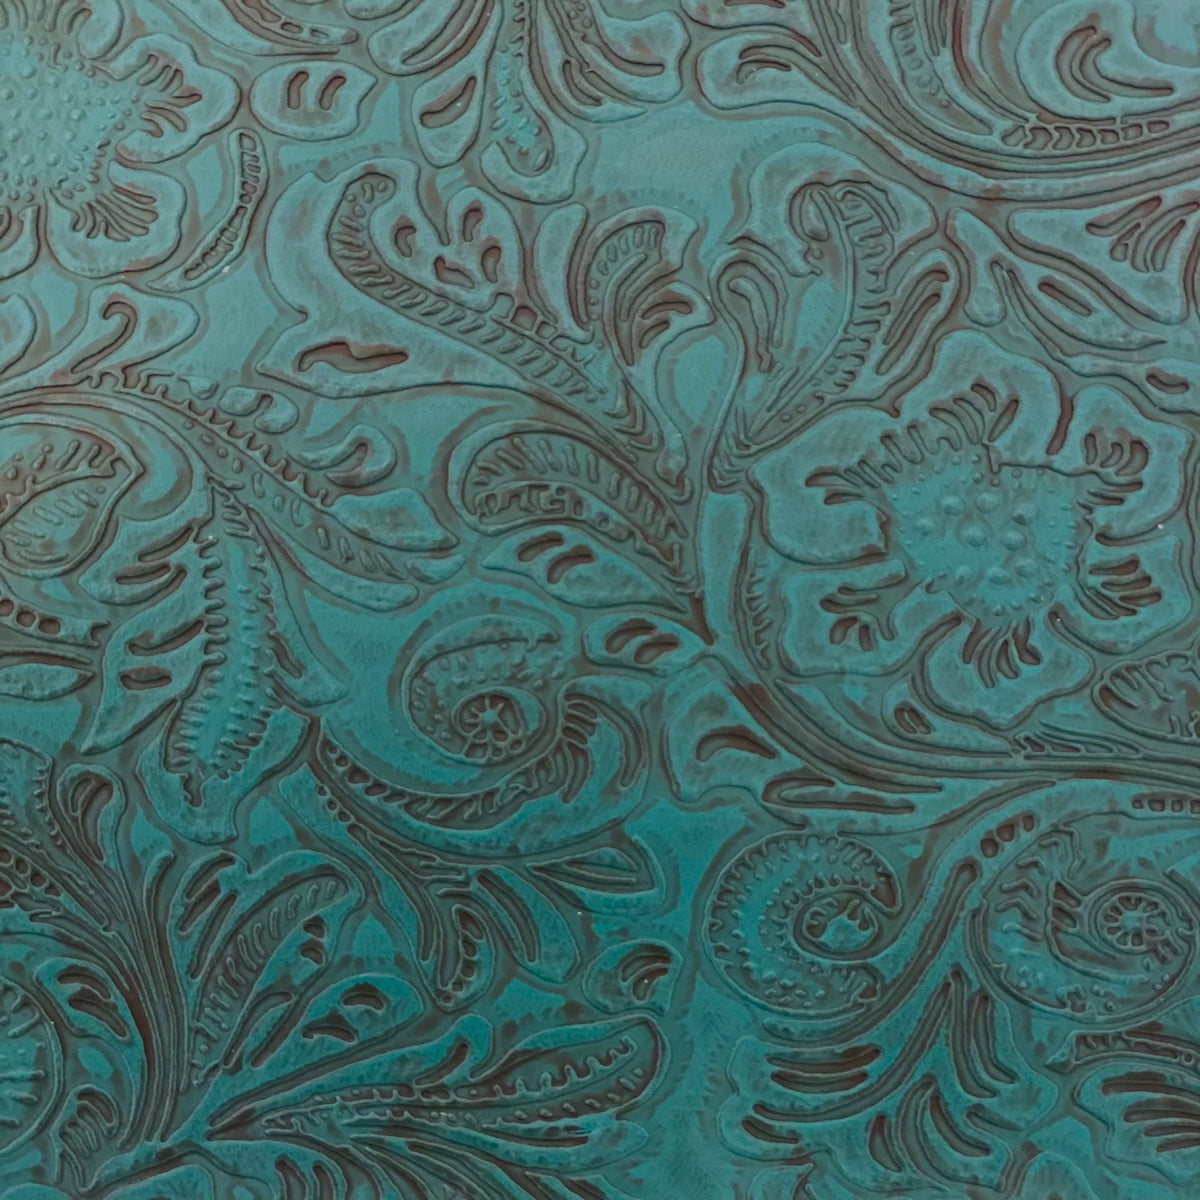 Tissu vinyle en similicuir PU floral occidental bleu turquoise